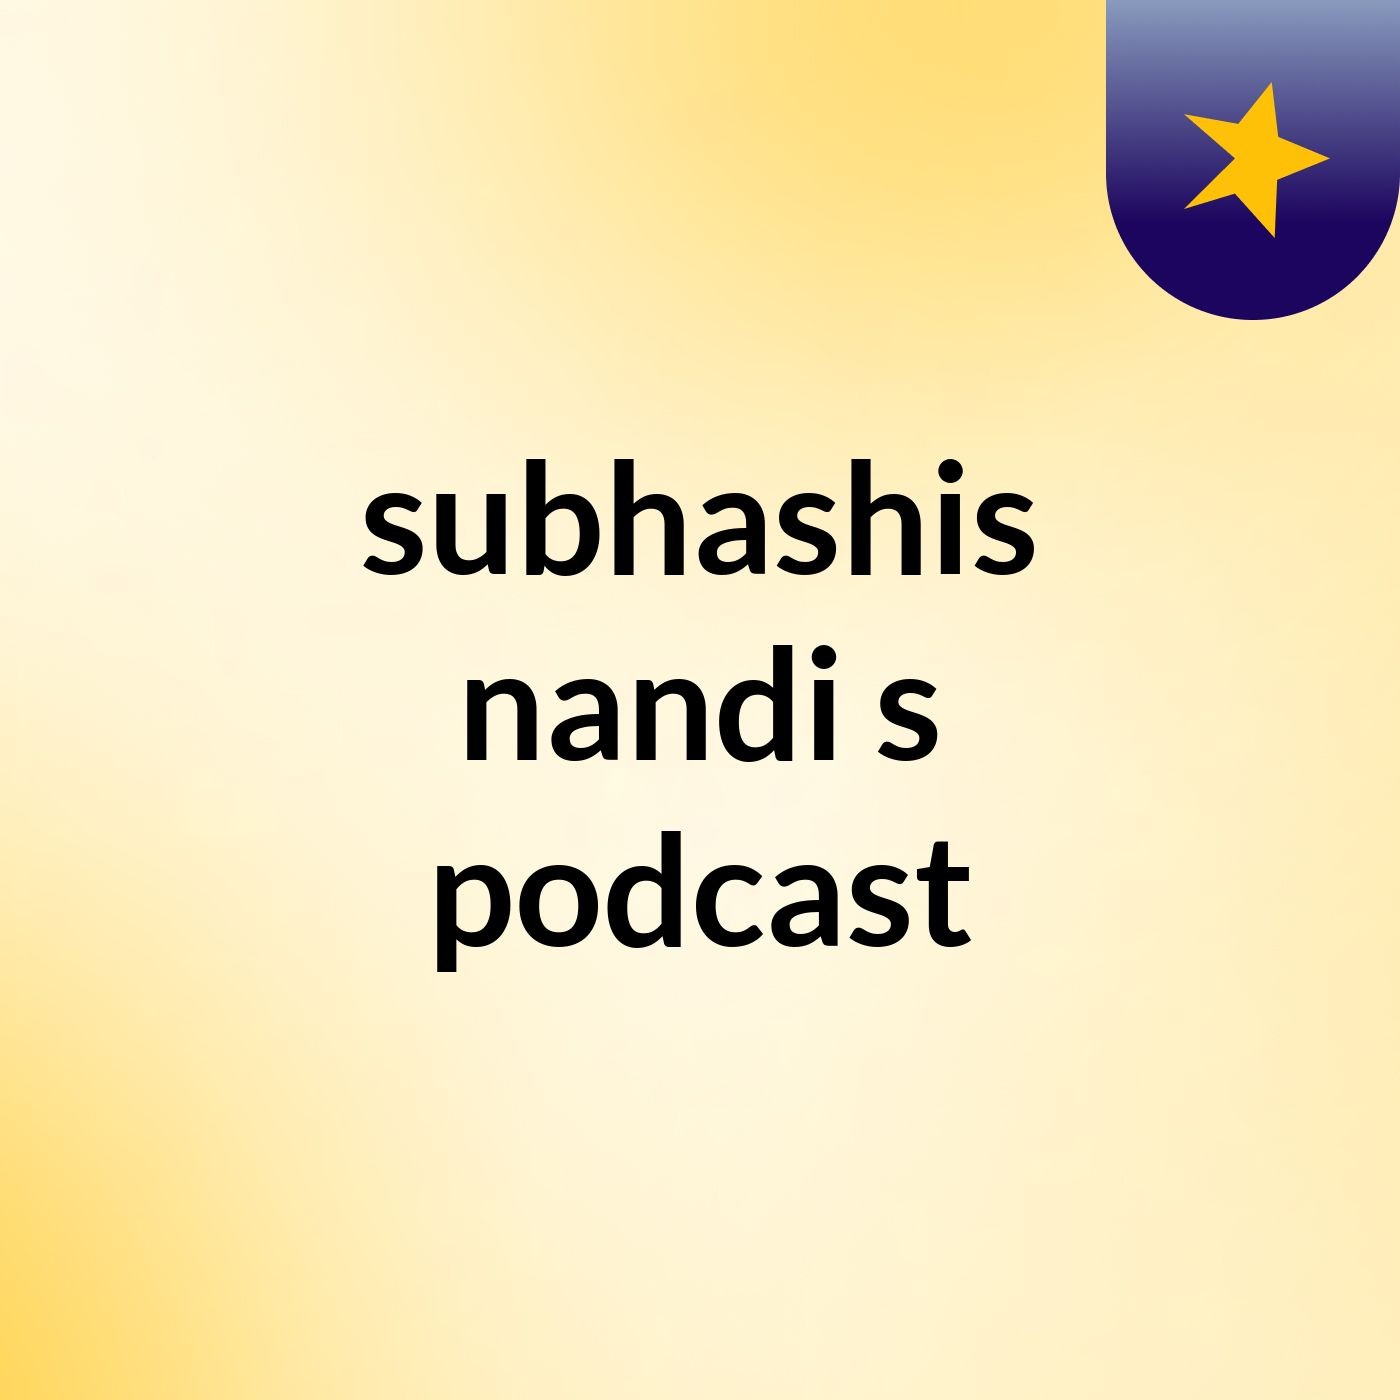 Episode 3 - subhashis nandi's podcast